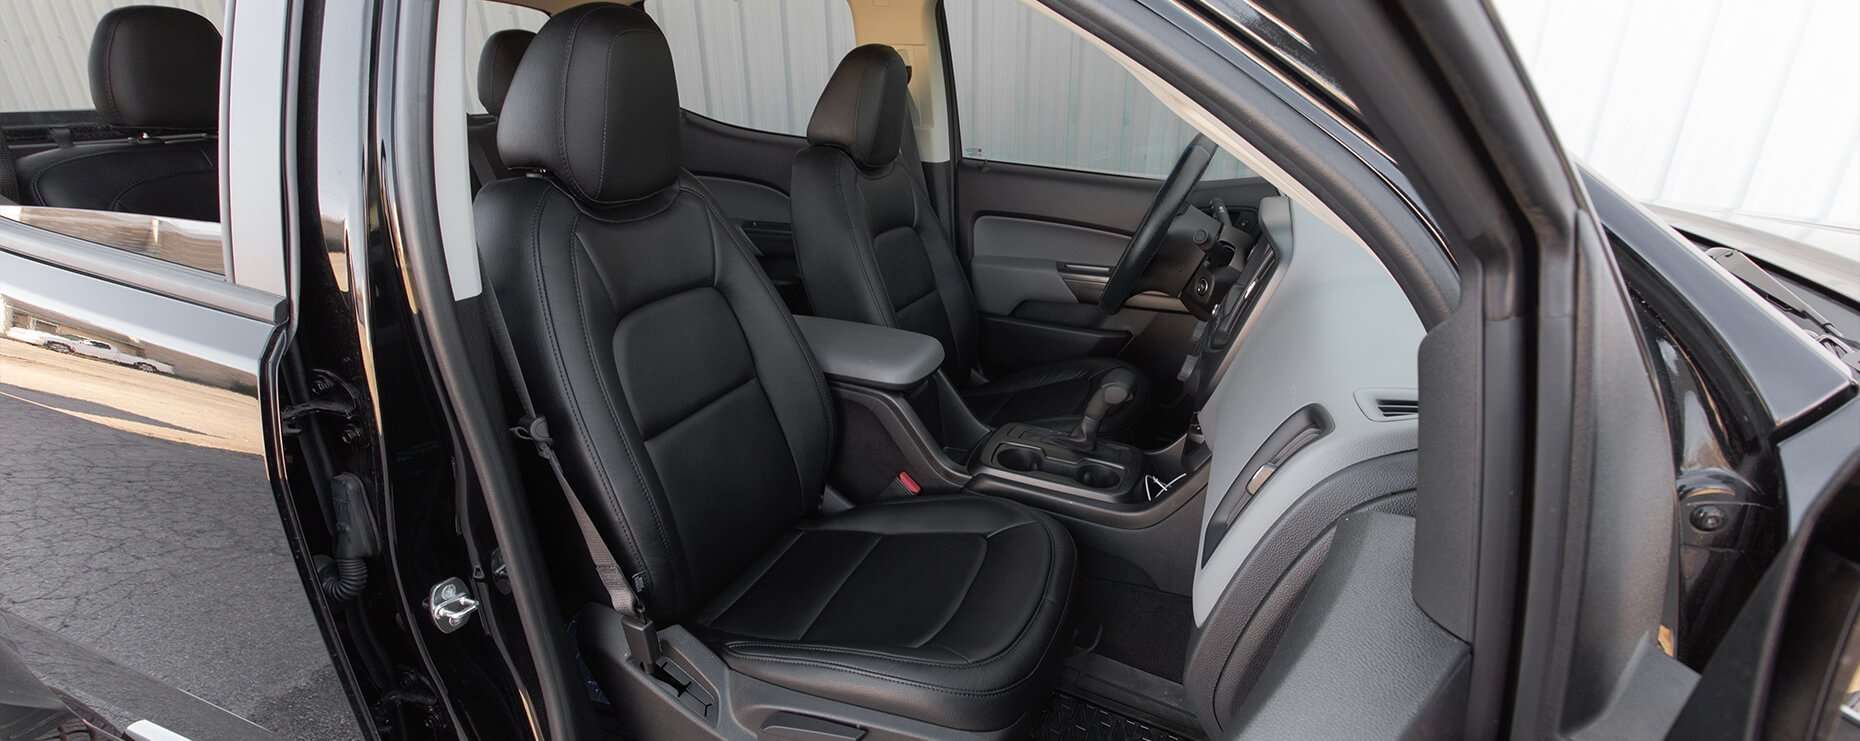 Front passenger seat of Chevrolet Colorado 